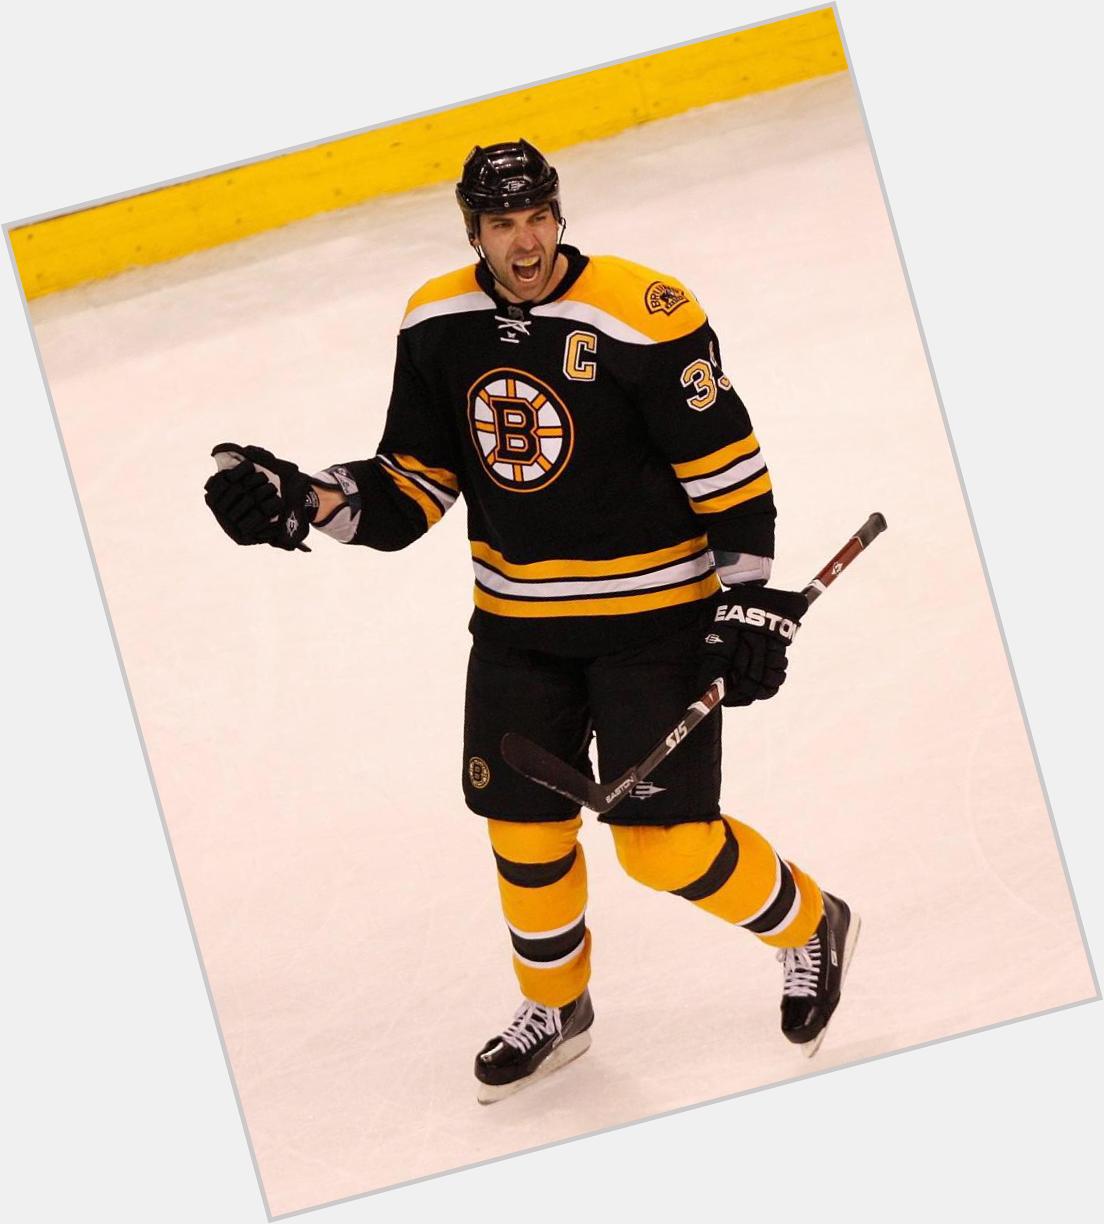 \" Happy 38th birthday to the Boston Bruins captain, Zdeno Chara!  should be a  